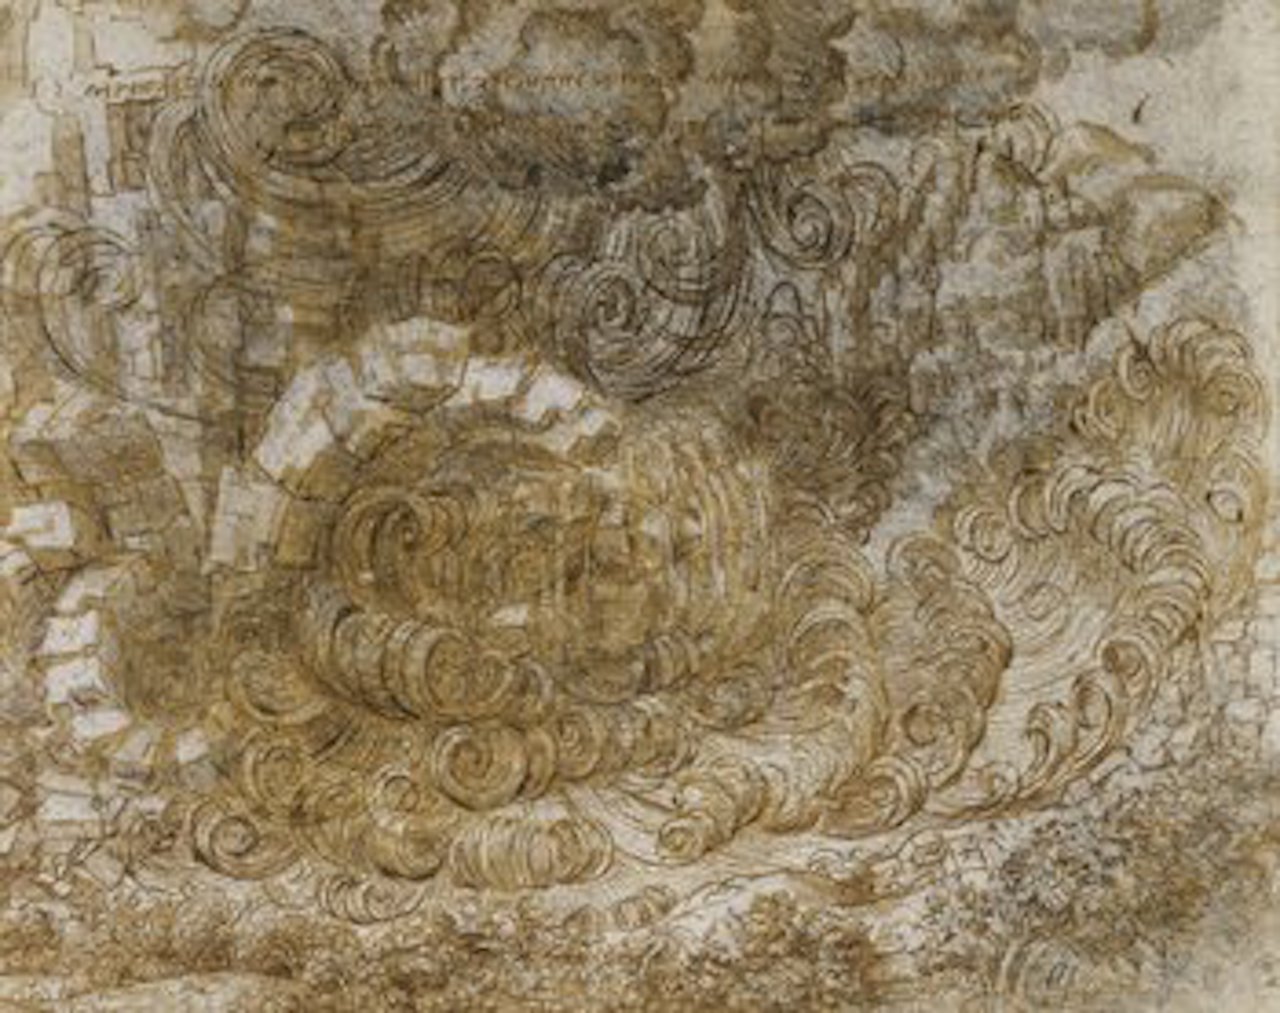 A deluge, c.1517–18, black chalk, pen and ink, wash